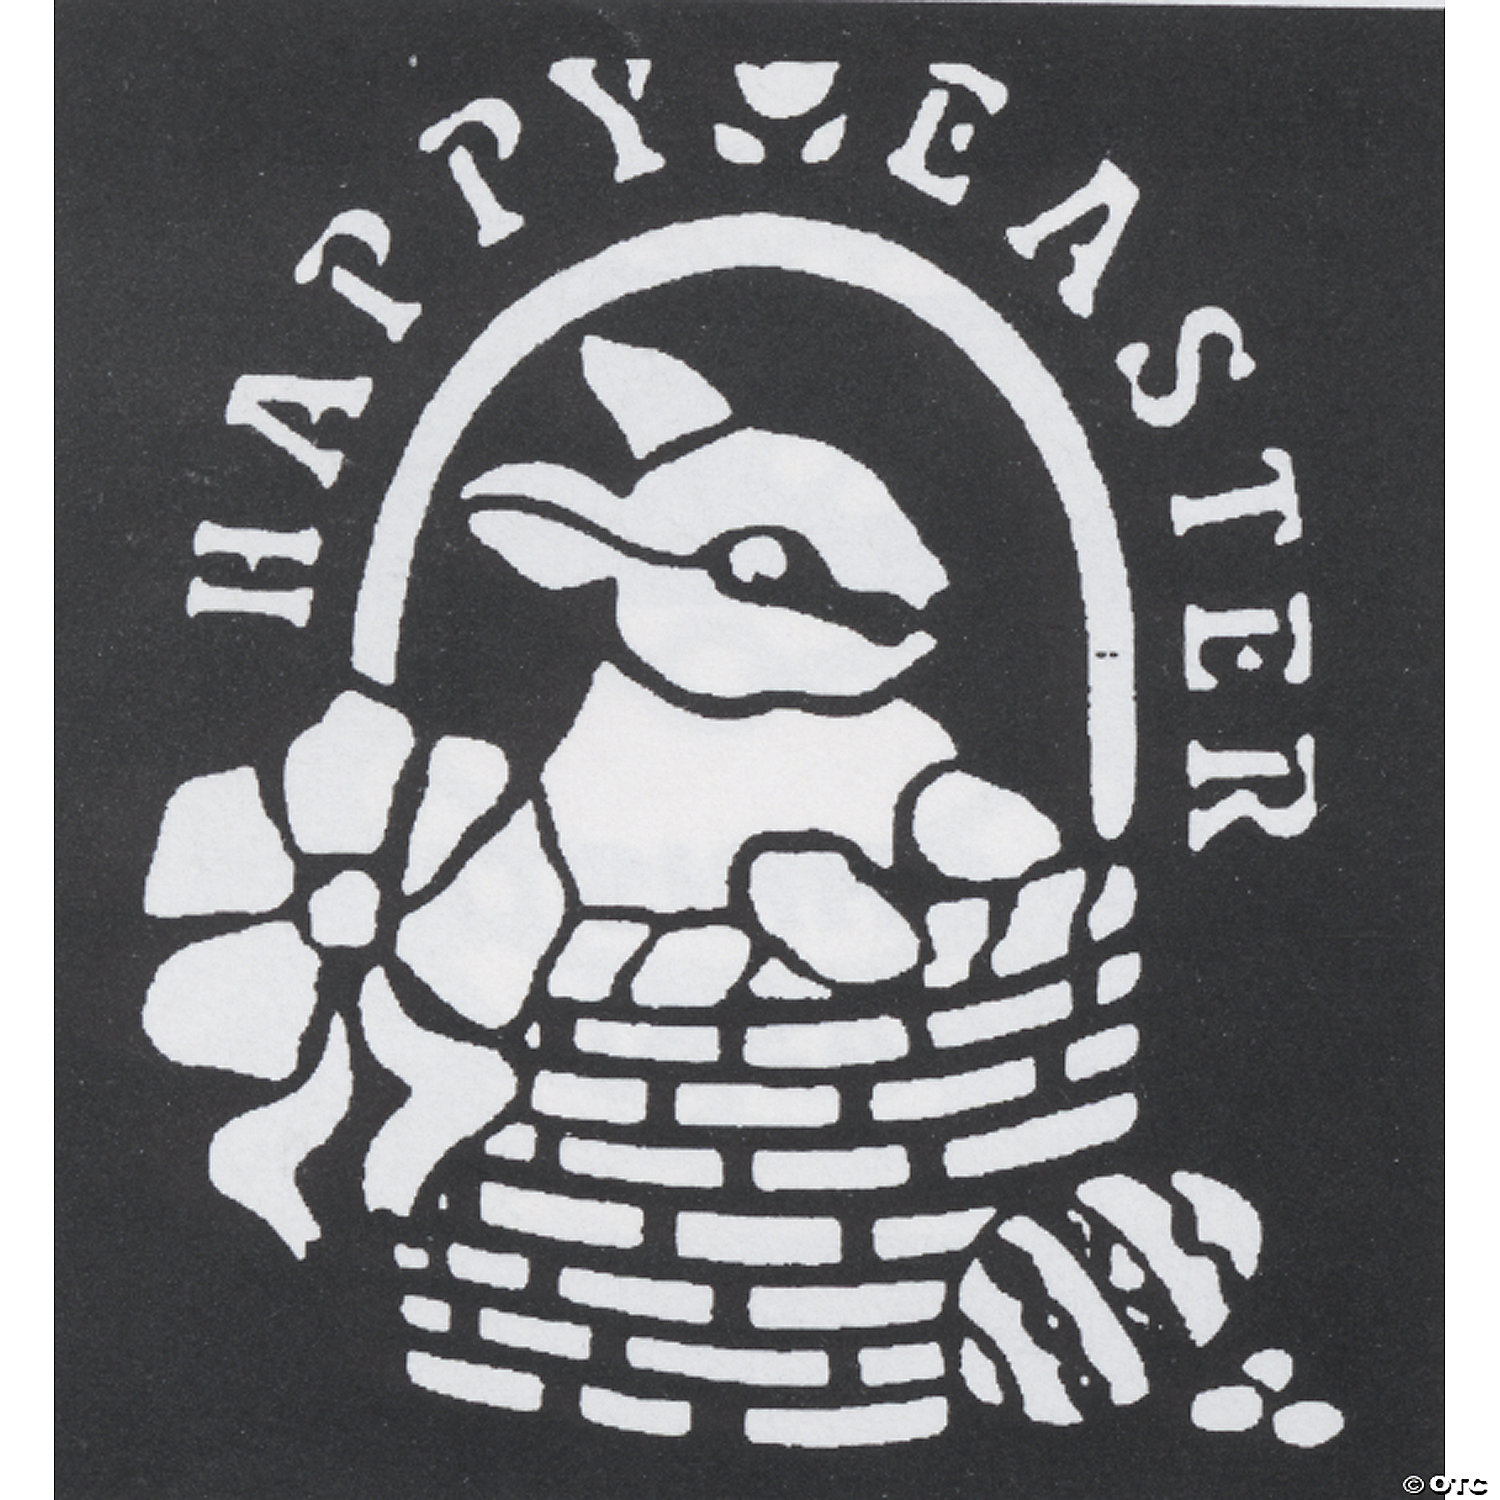 HAPPY EASTER BRASS STENCIL - HALLOWEEN